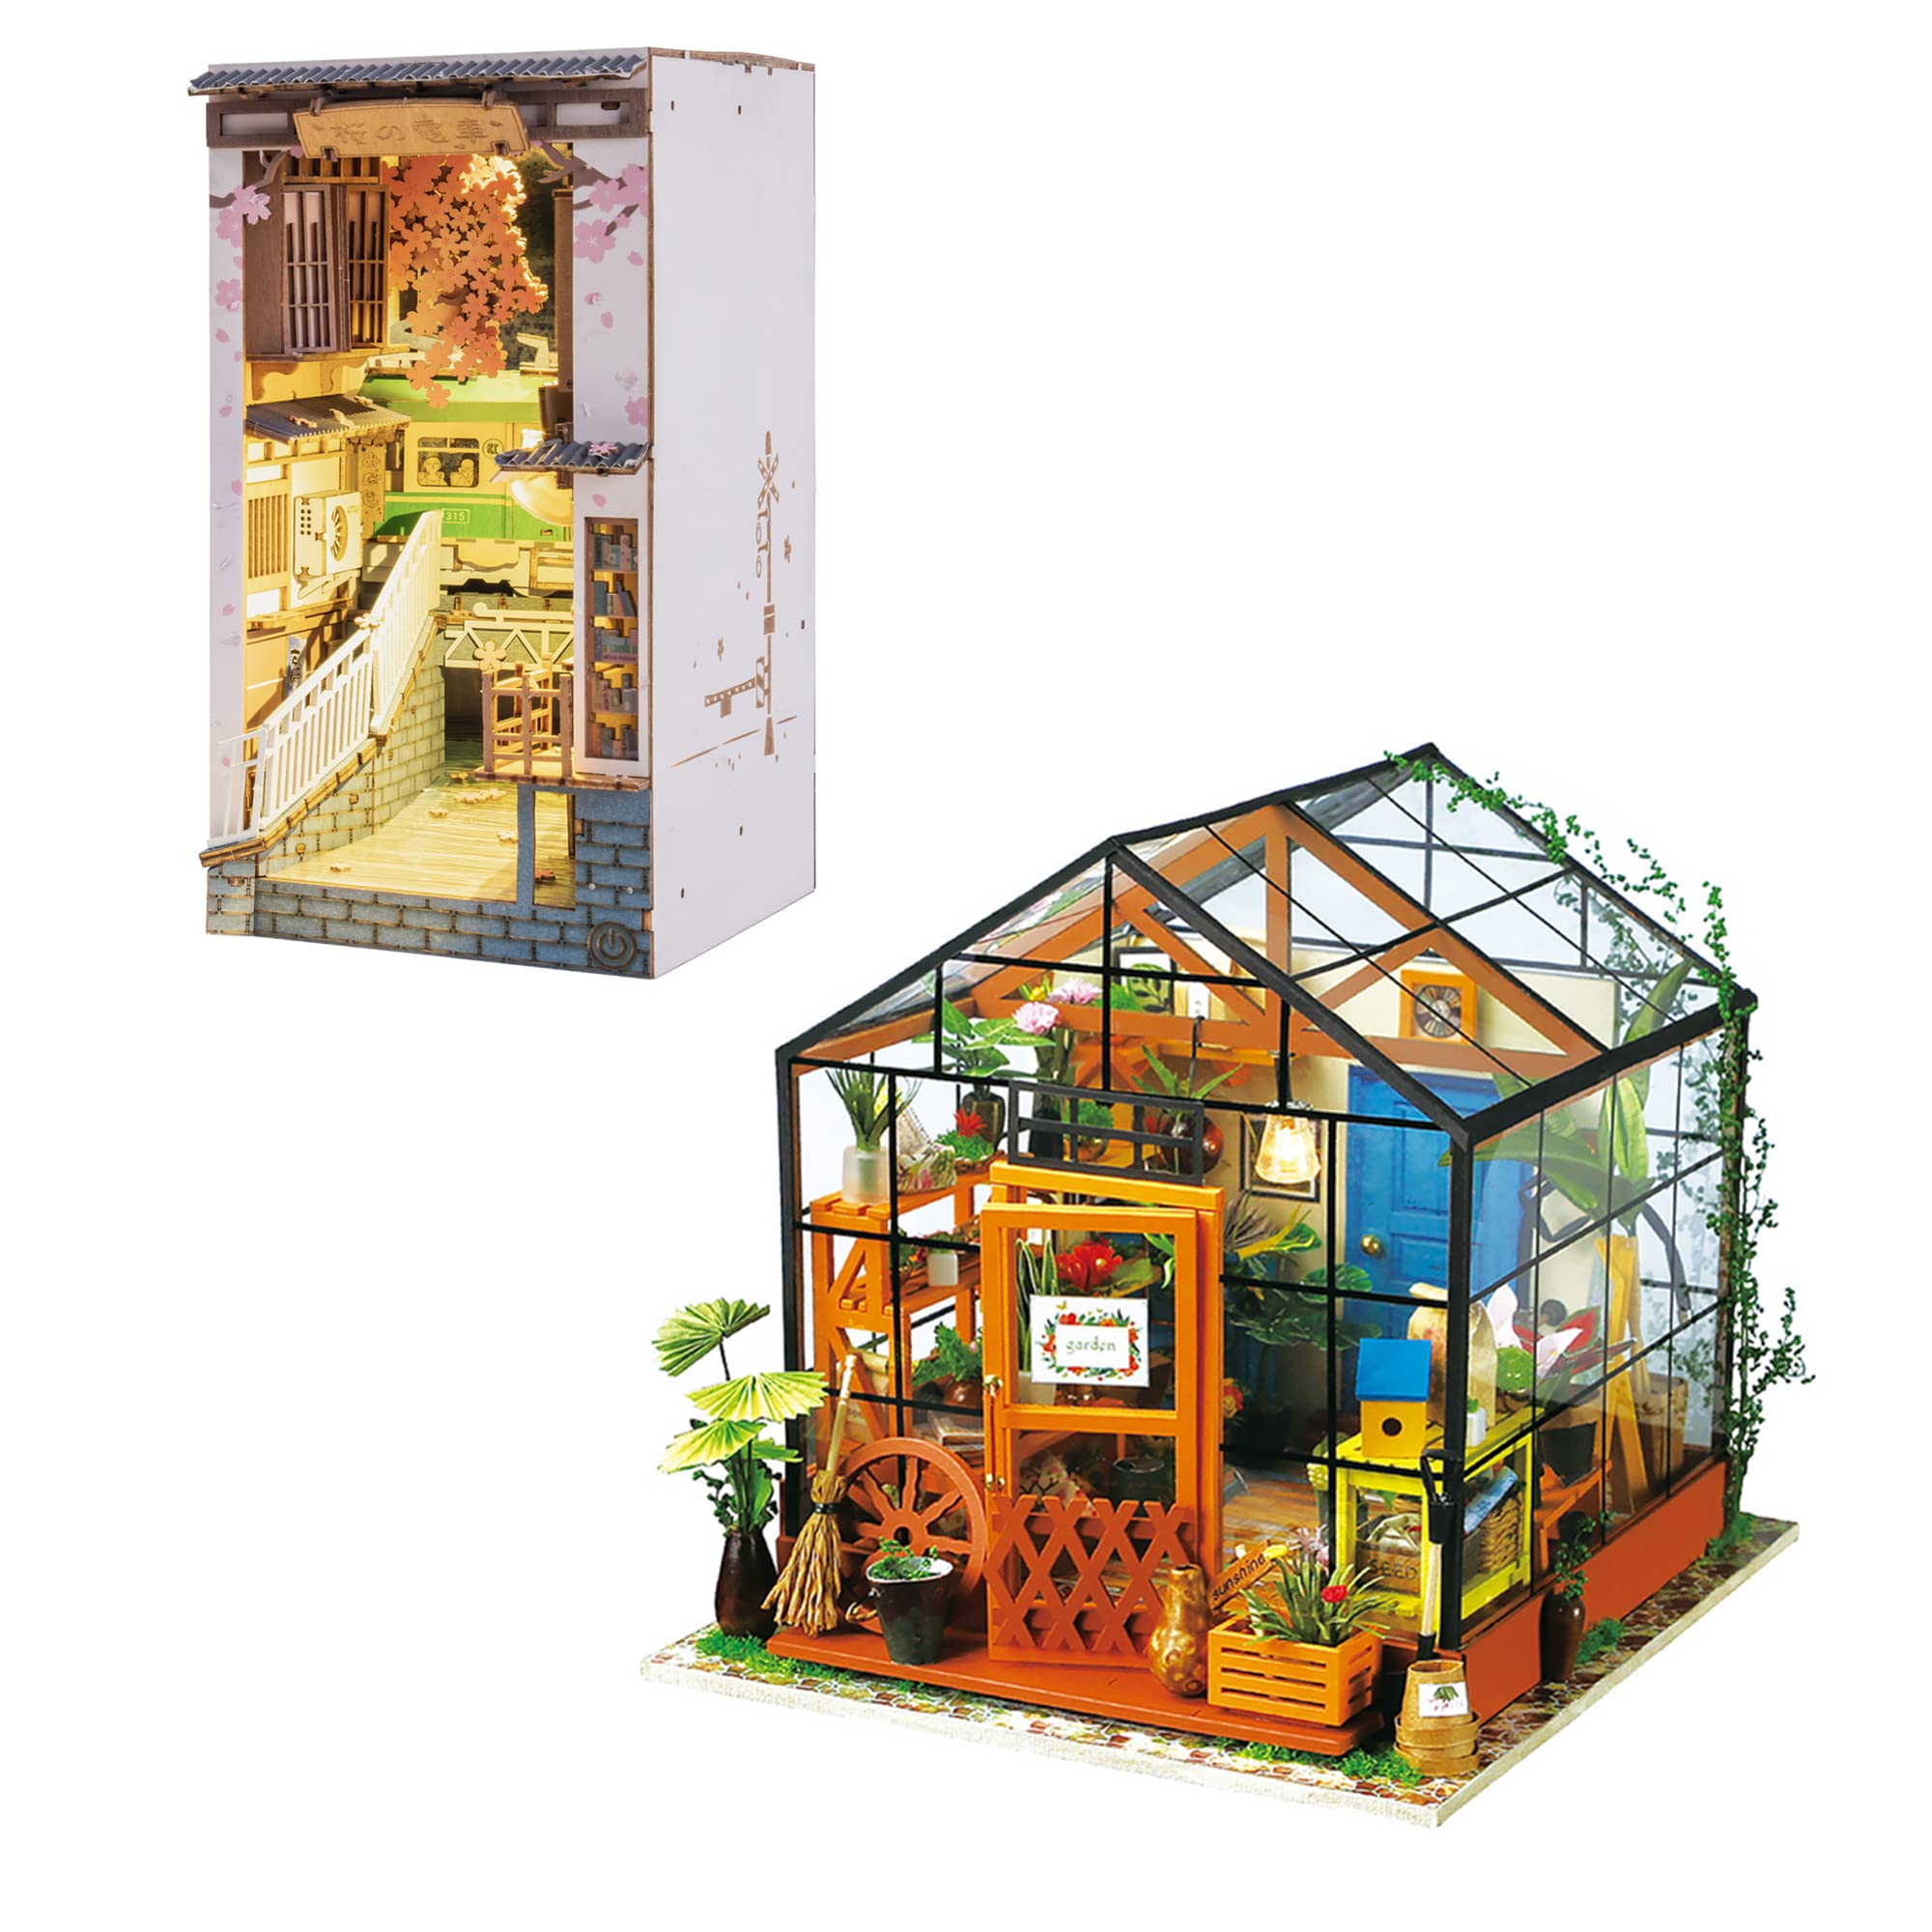 ROBOTIME DIY Miniature Dollhouse Kit and DIY Book Nook Kit